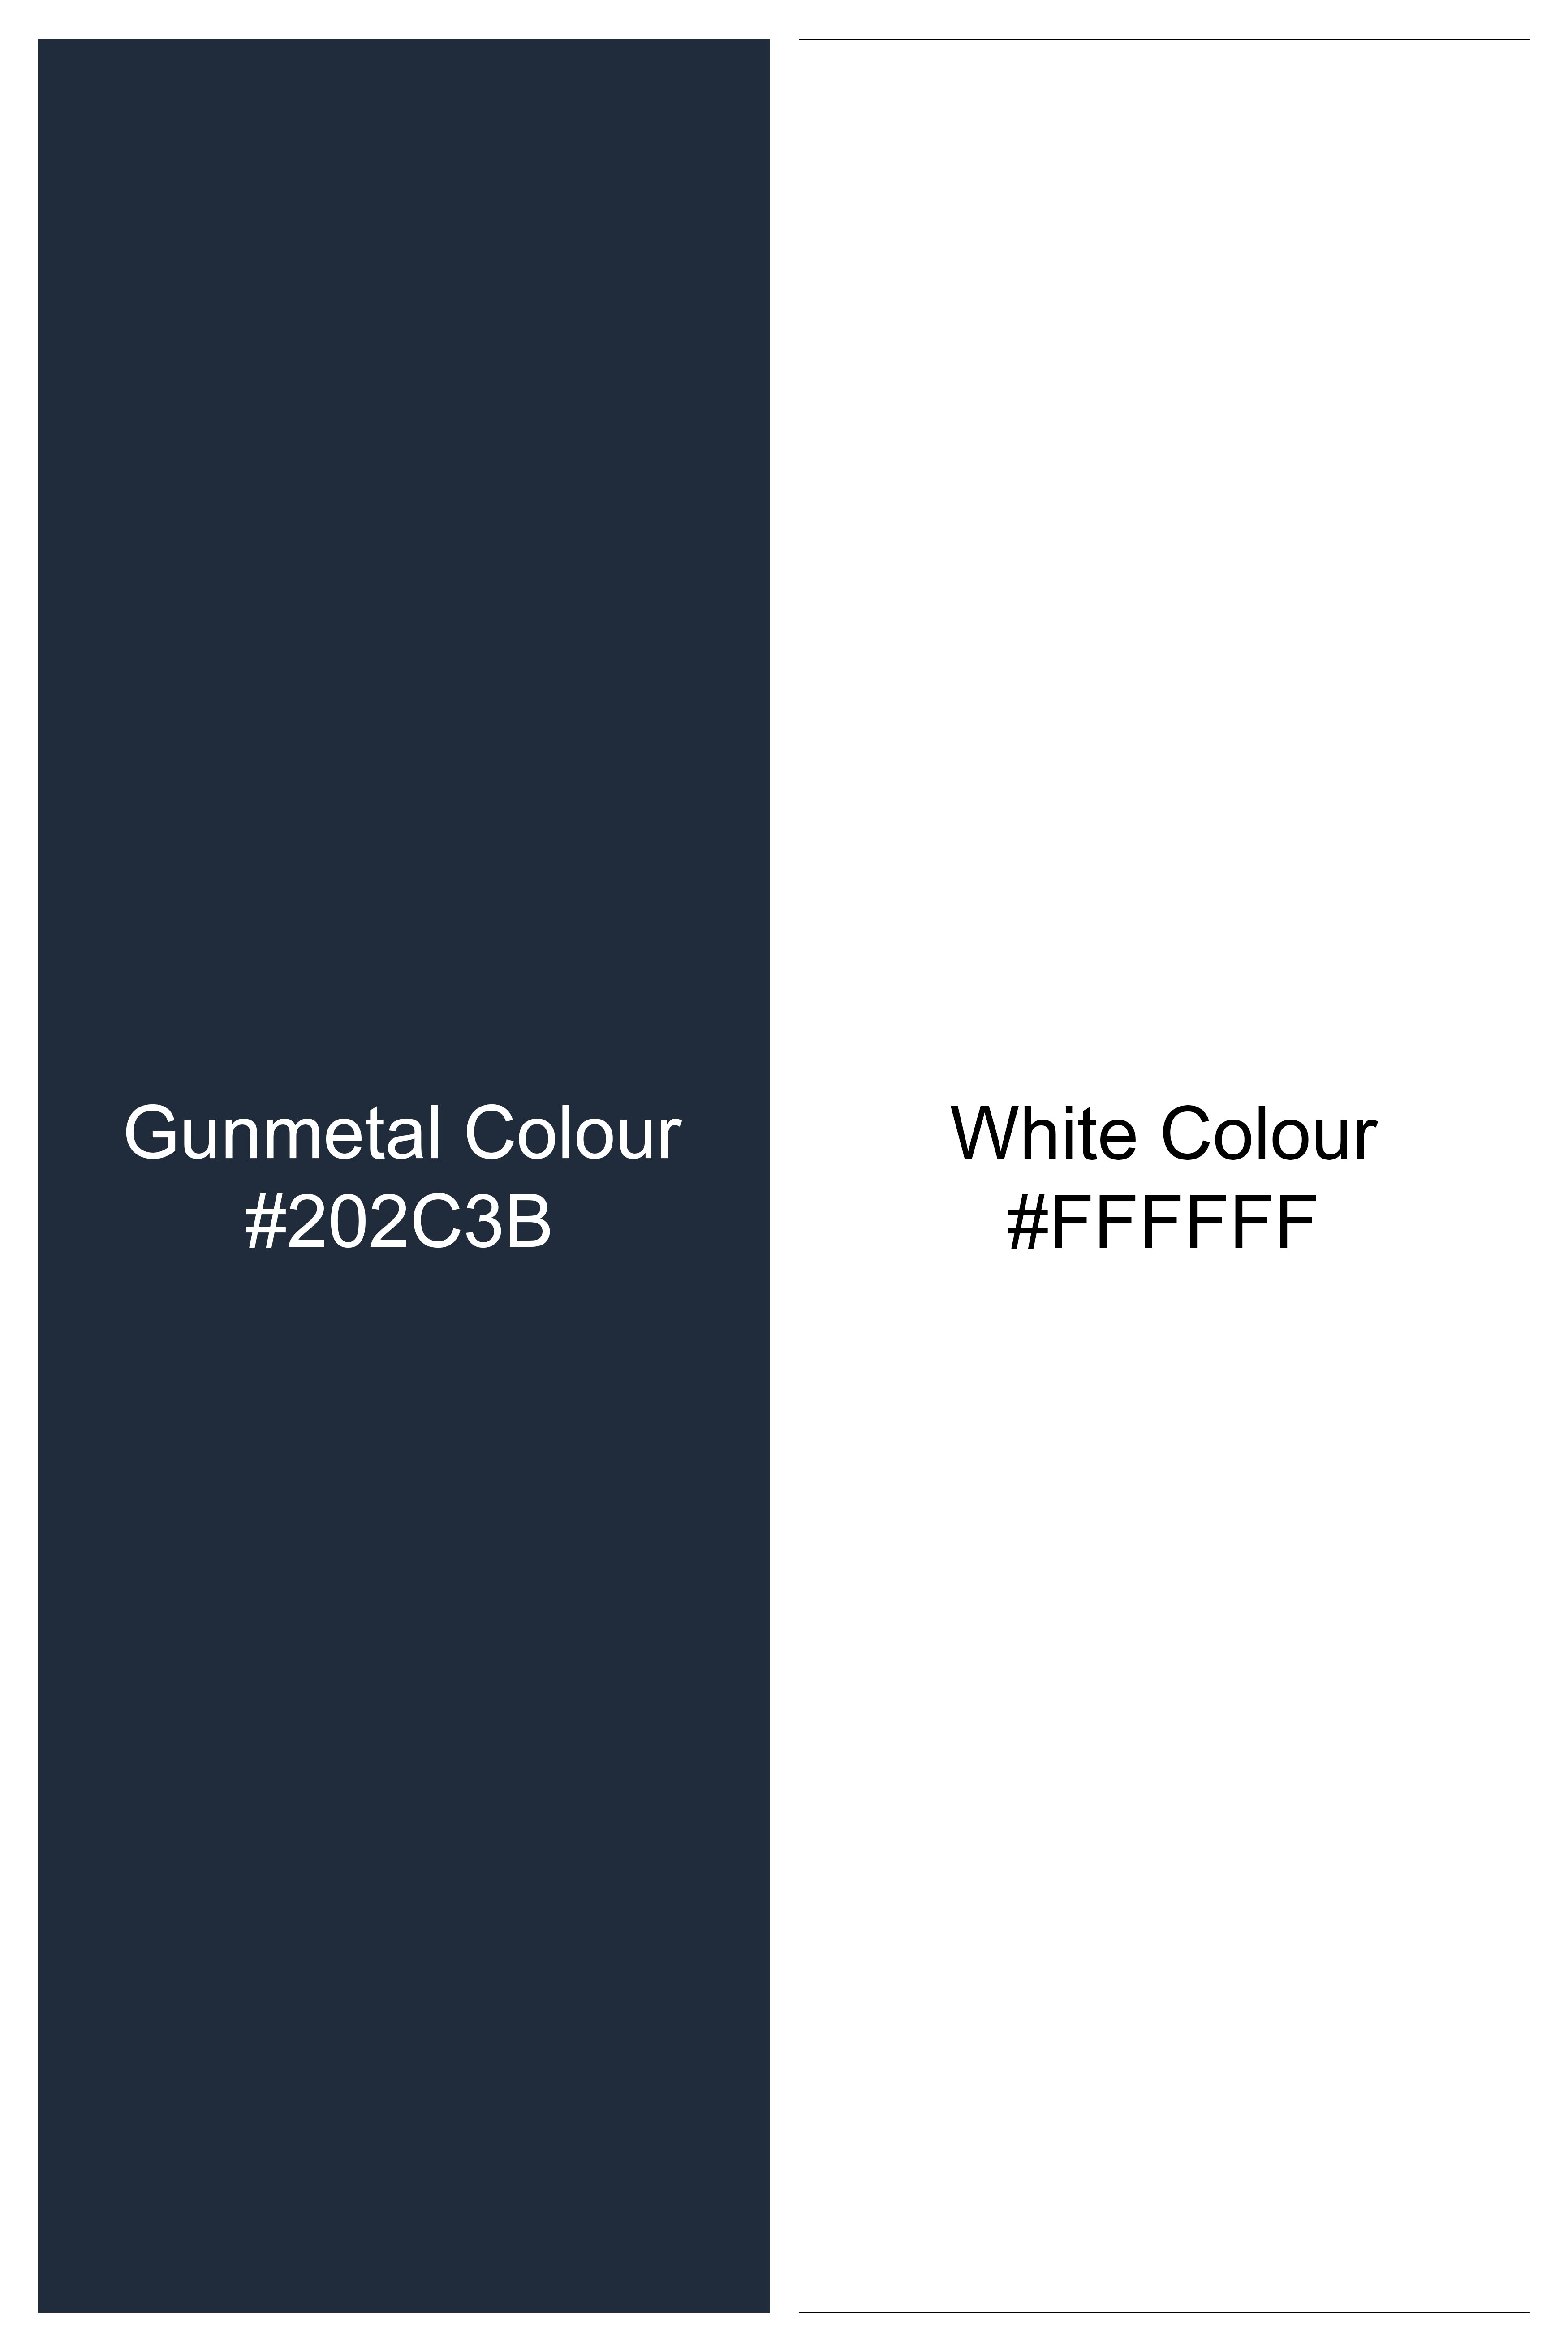 Gunmetal Blue with White Striped Premium Wool Rich Designer Suit ST2772-DB-D481-36,ST2772-DB-D481-38,ST2772-DB-D481-40,ST2772-DB-D481-42,ST2772-DB-D481-44,ST2772-DB-D481-46,ST2772-DB-D481-48,ST2772-DB-D481-50,ST2772-DB-D481-52,ST2772-DB-D481-54,ST2772-DB-D481-56,ST2772-DB-D481-58,ST2772-DB-D481-60